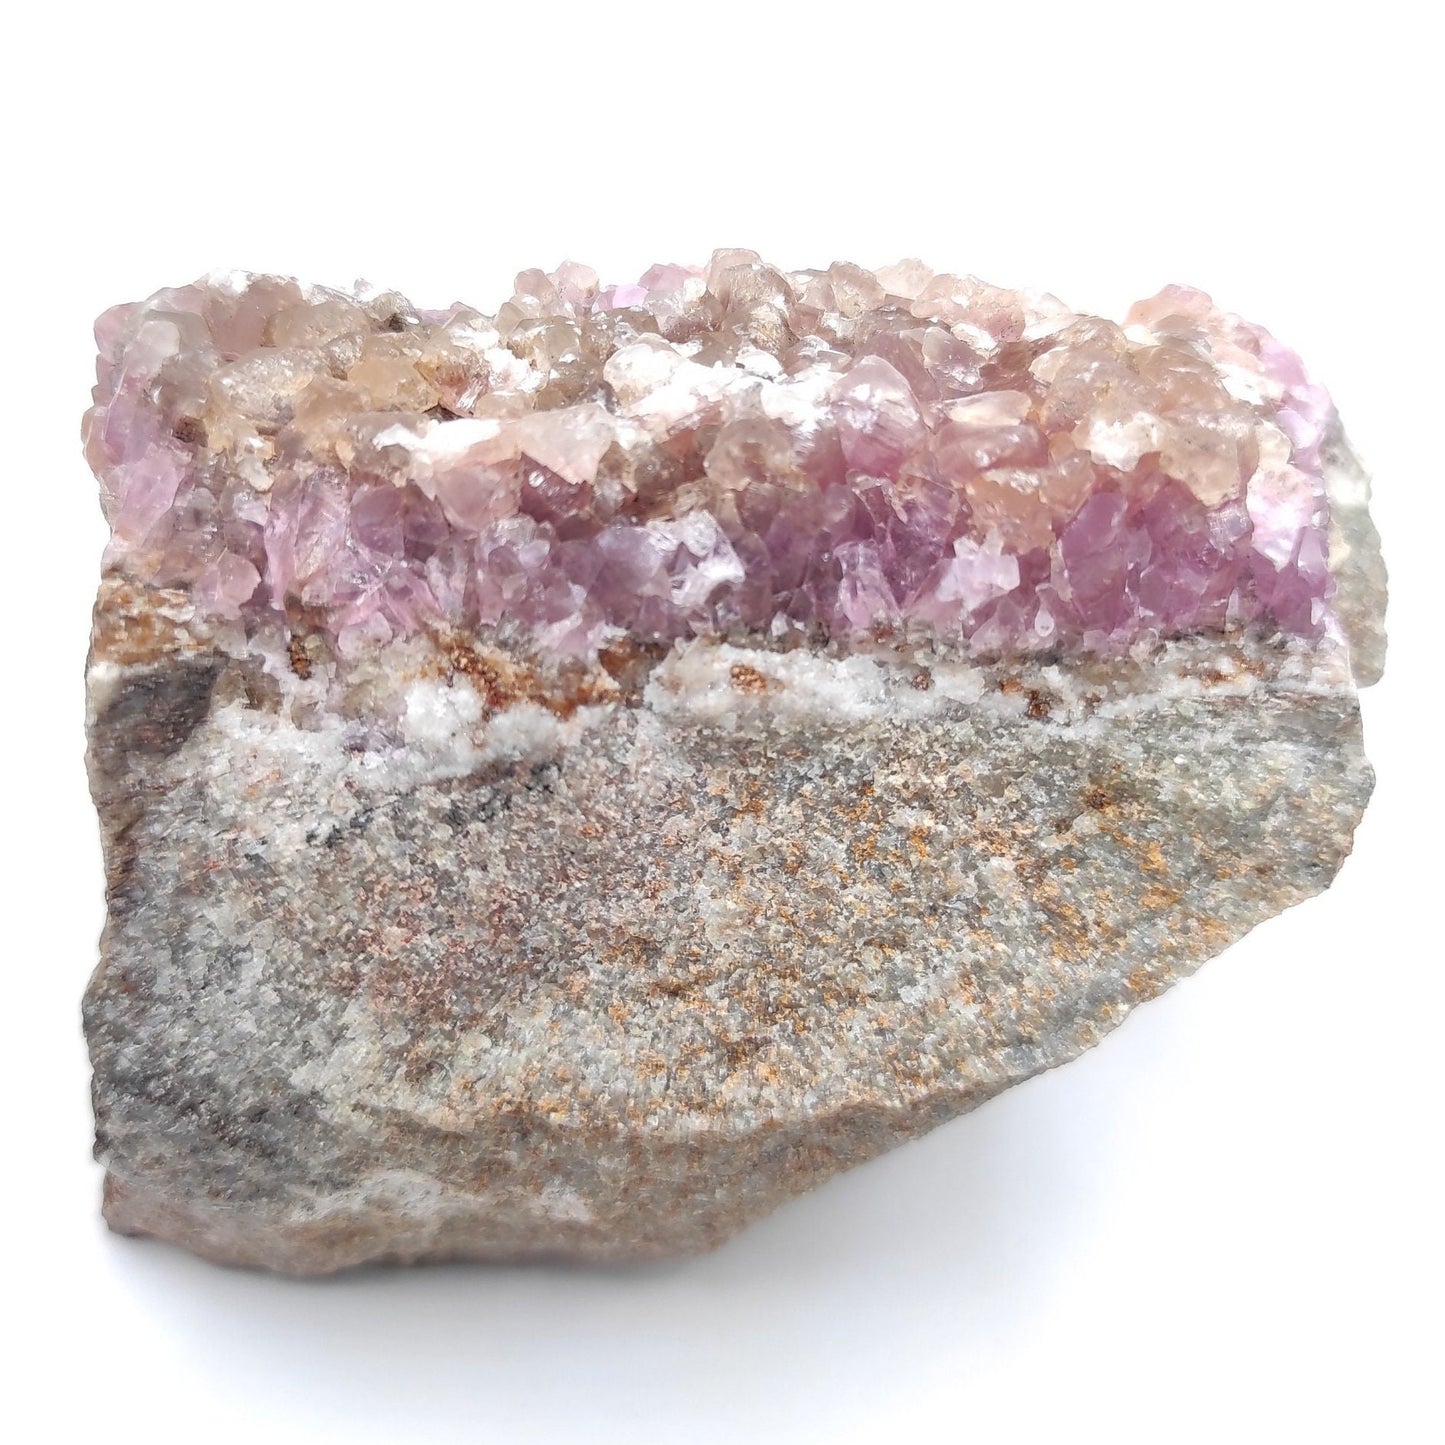 443g Cobalto Calcite in Matrix - Pink Cobalt Calcite from Bou Azzer, Morocco - Salrose Crystal - Cobaltocalcite Mineral Specimen